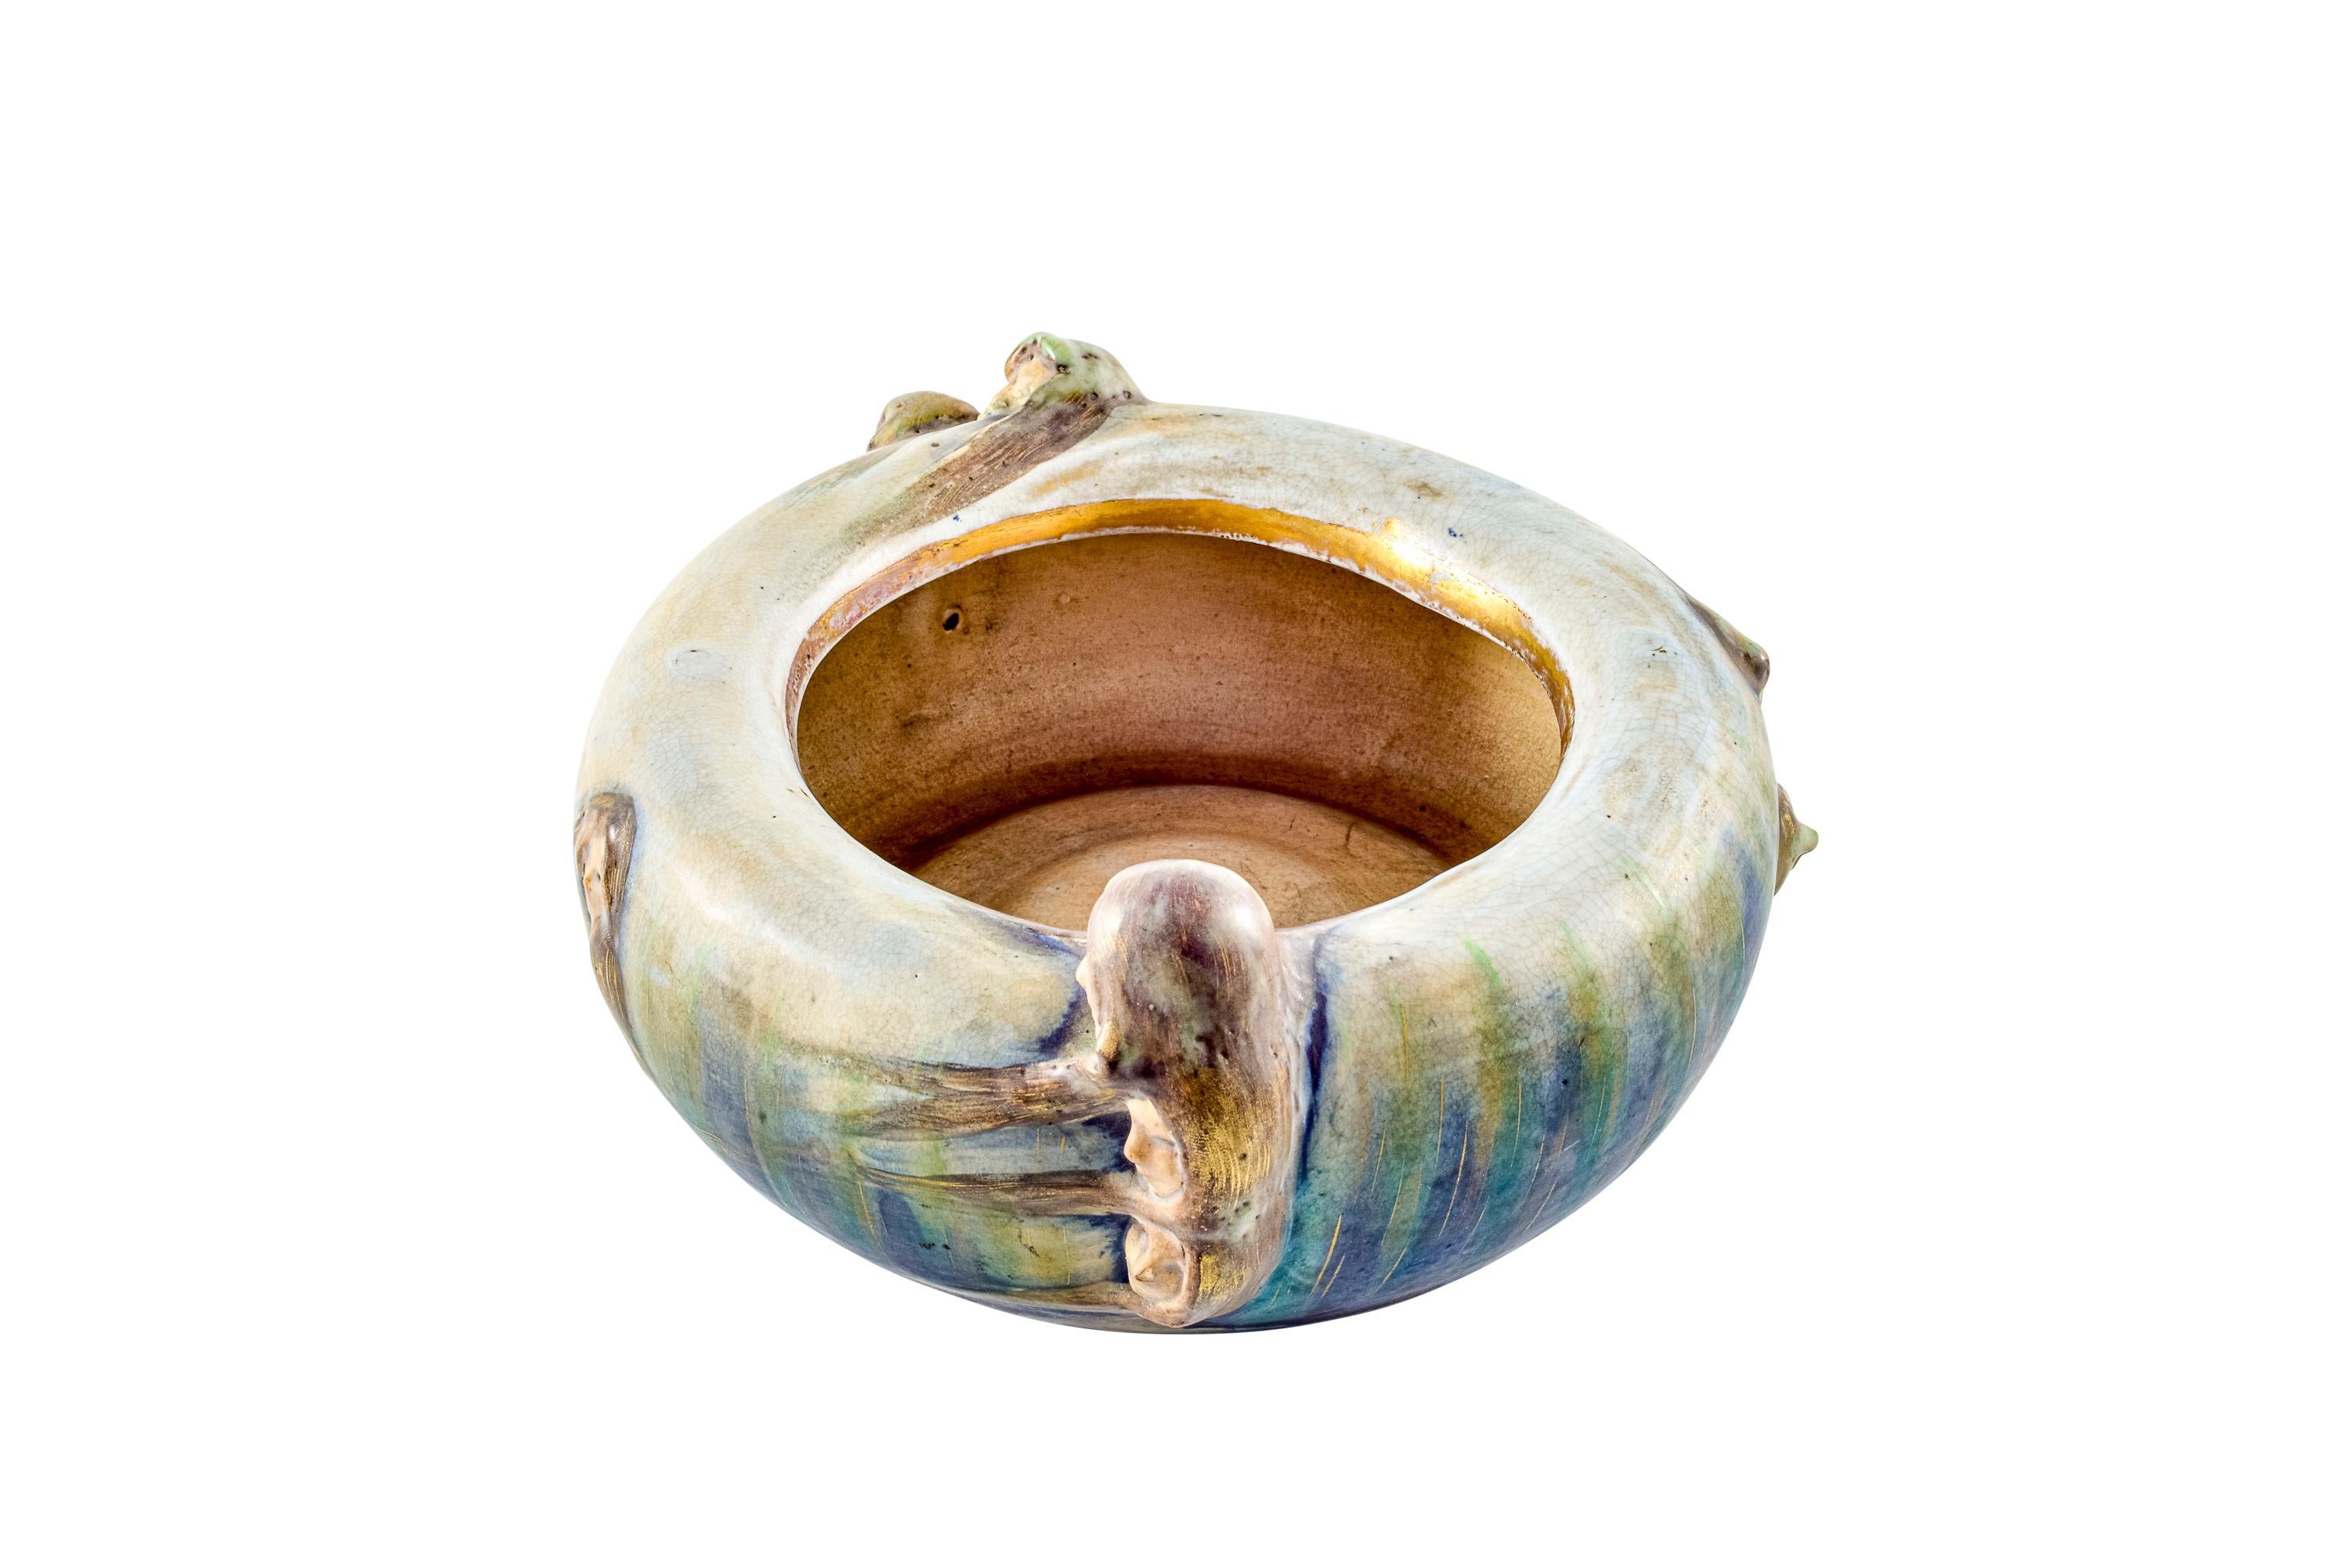 Bowl Symbolist Art Nouveau Bohemia circa 1902 Ceramics Fates series designed by Eduard Stellmacher, manufactured by Amphora Riessner Stellmacher & Kessel Turn-Teplitz

This bowl is a beautiful example of symbolist craftsmanship of Art Nouveau.